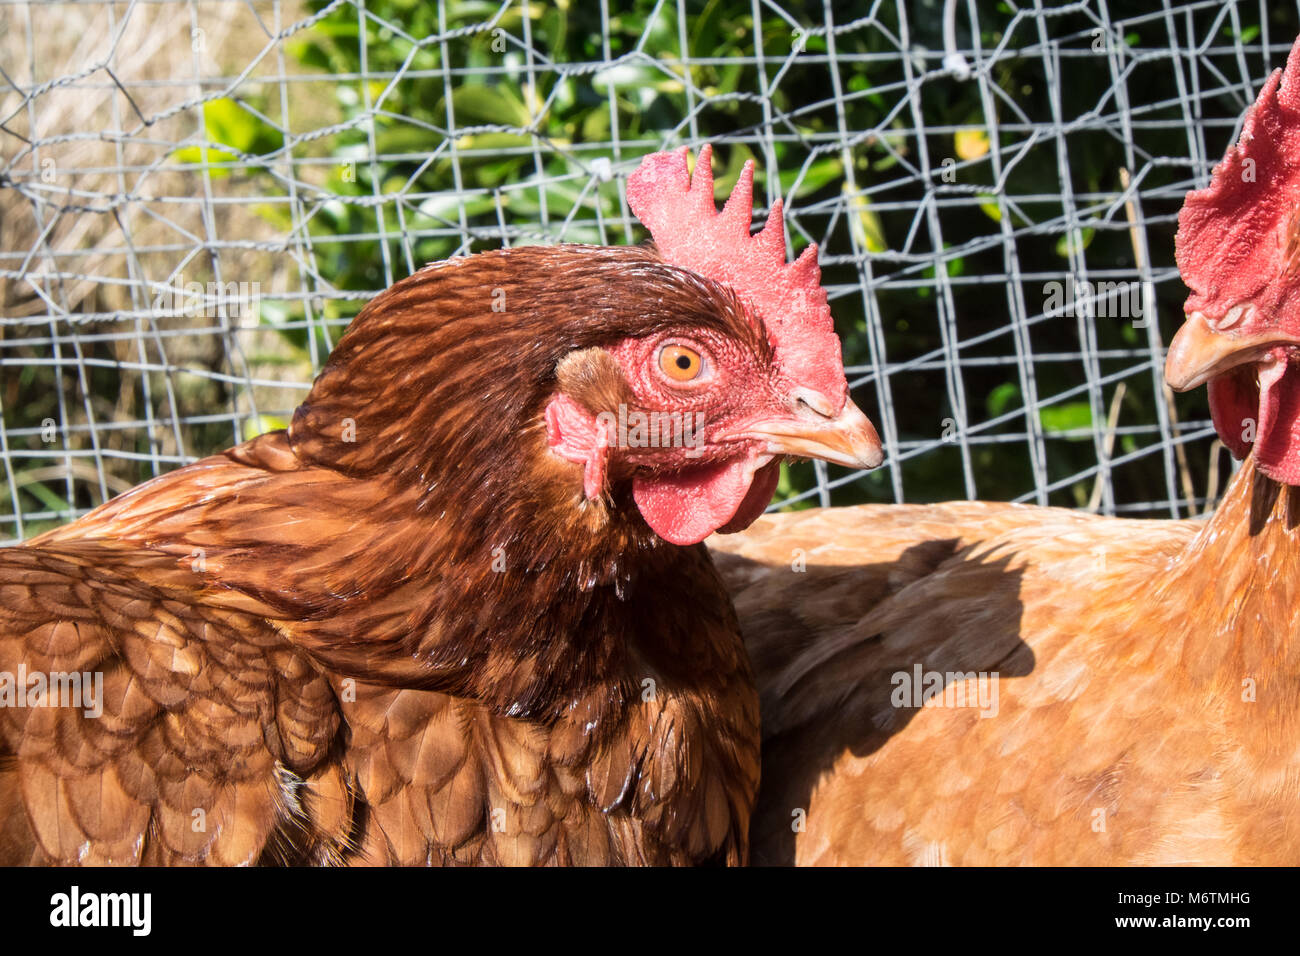 Small,flock,of,seven,backyarden,garden,chicken,hens,brown,Warren,breed,basking,in the sun, lay,eggs,Llansaint,village,Carmarthenshire,Wales,U.K.,UK, Stock Photo